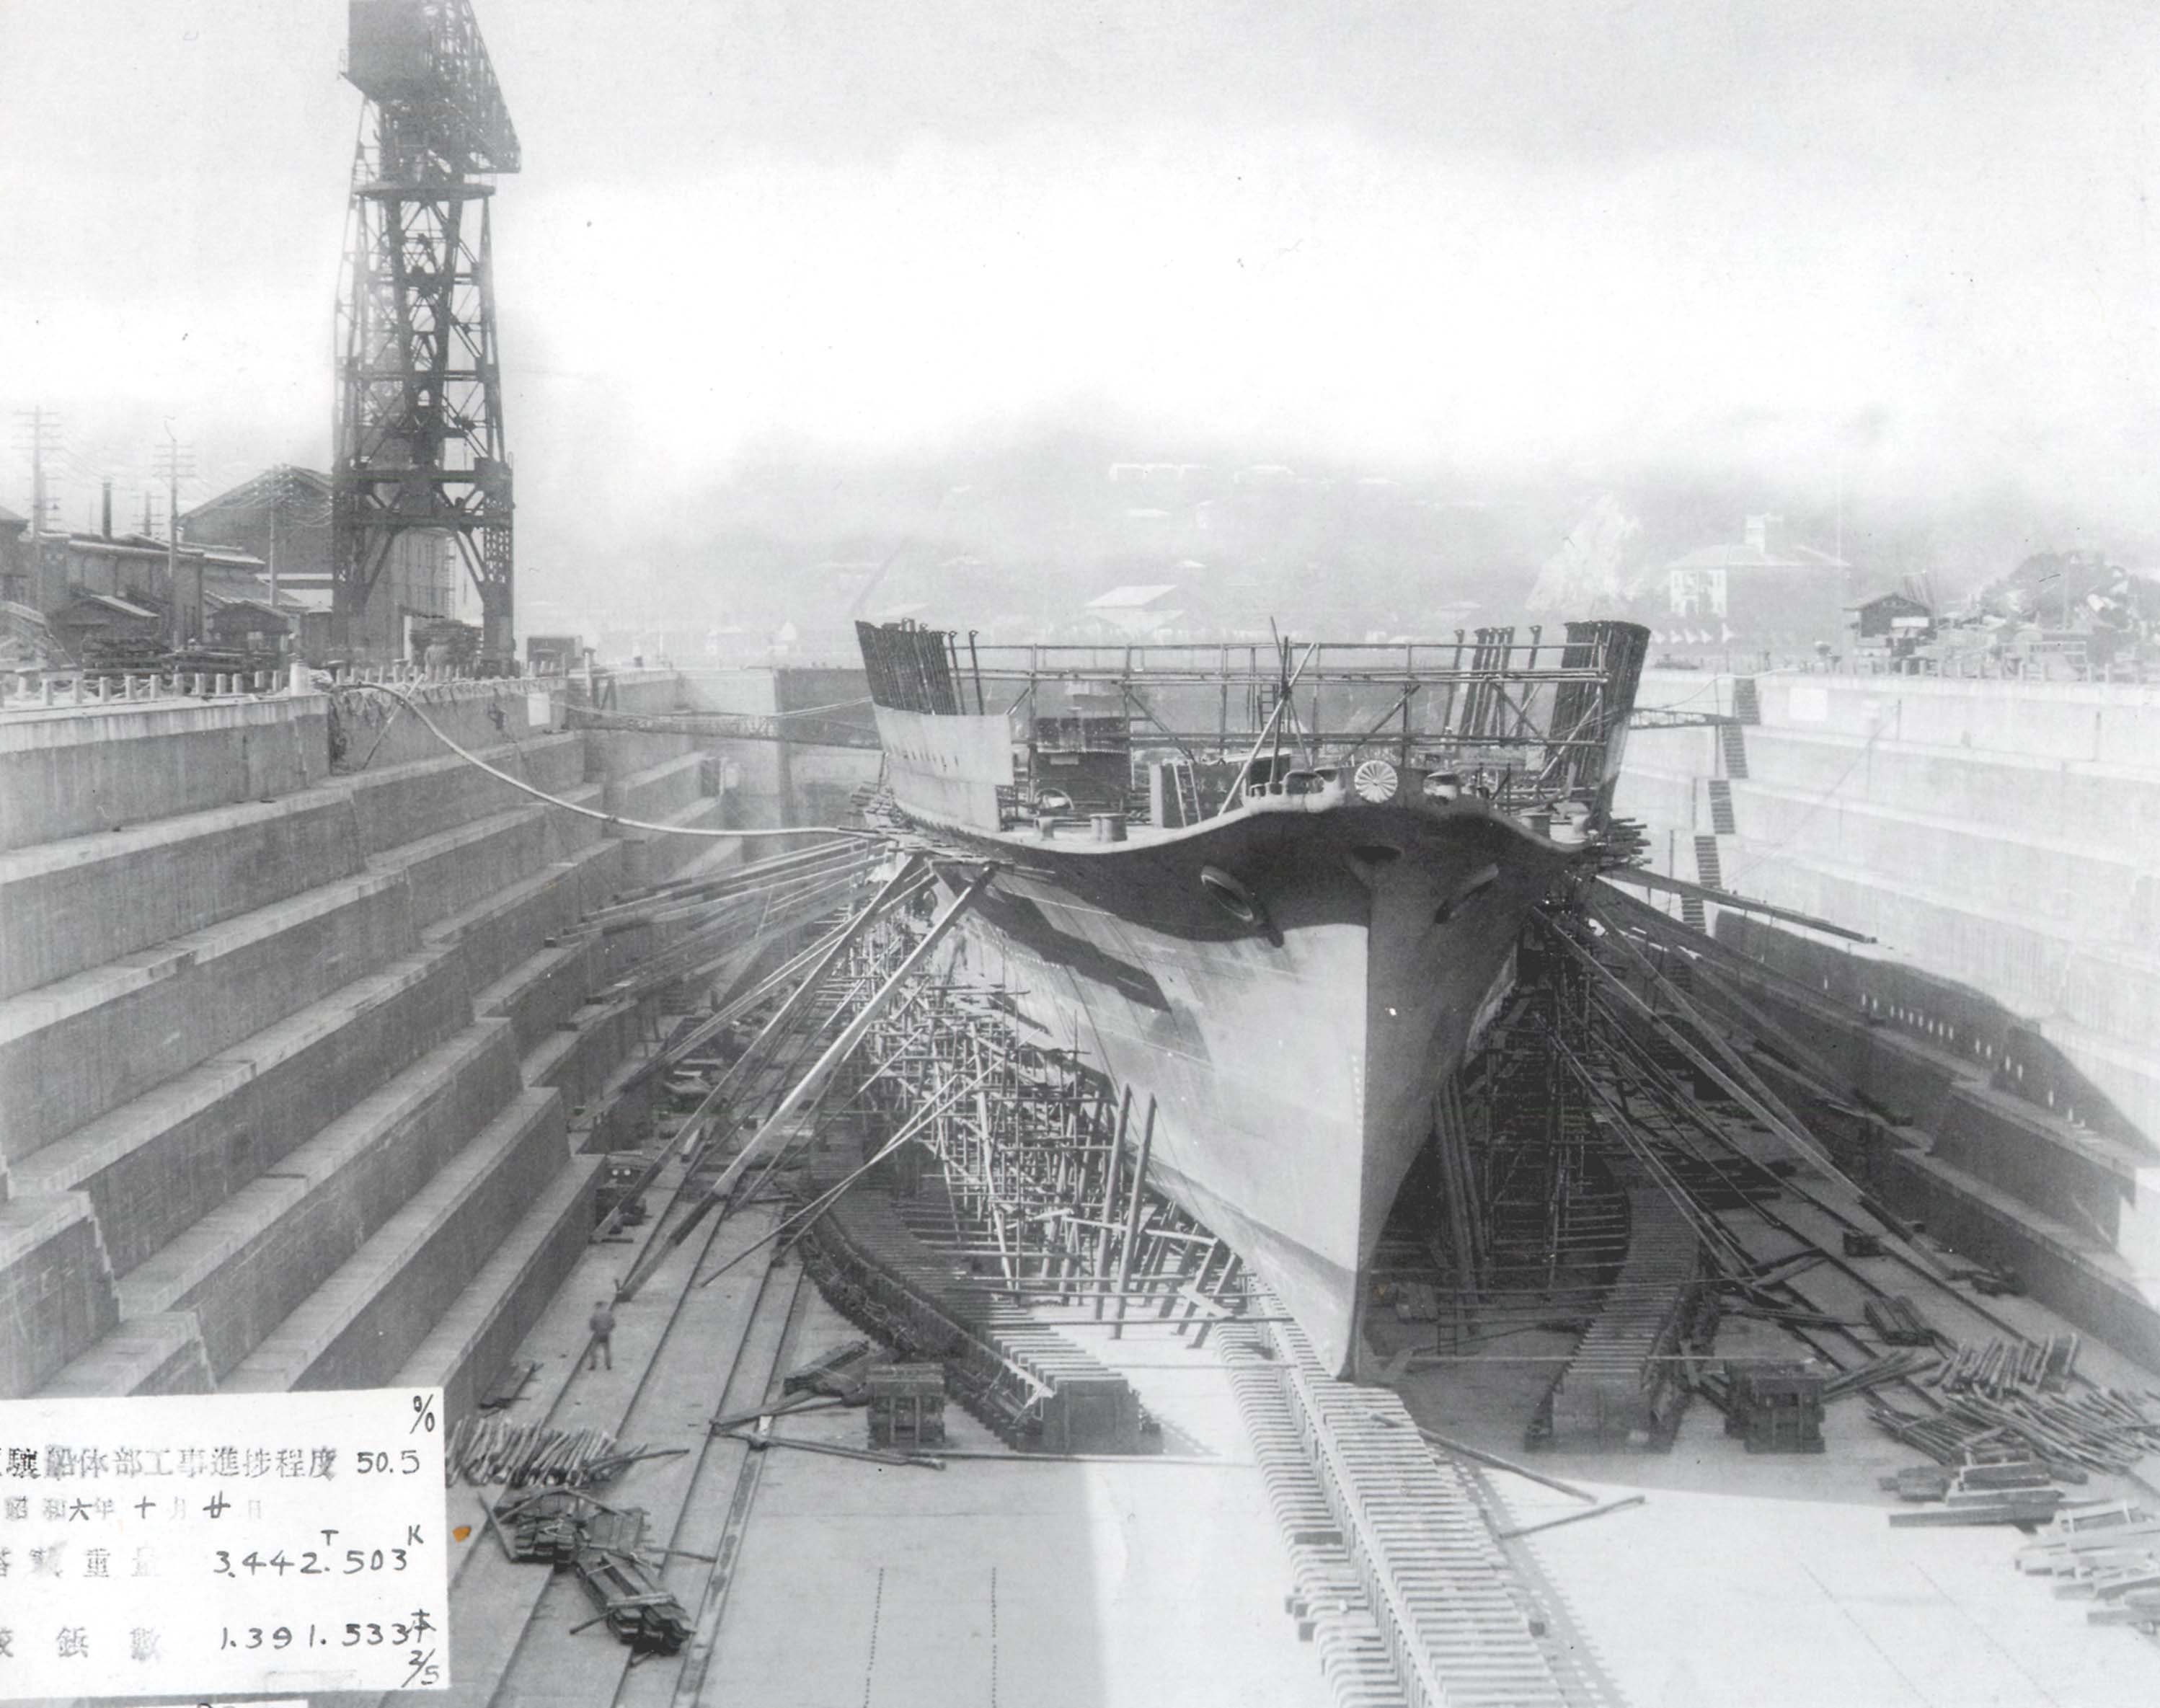 Carrier Ryujo under construction in Drydock No. 5, Yokosuka, Japan, 20 Oct 1931